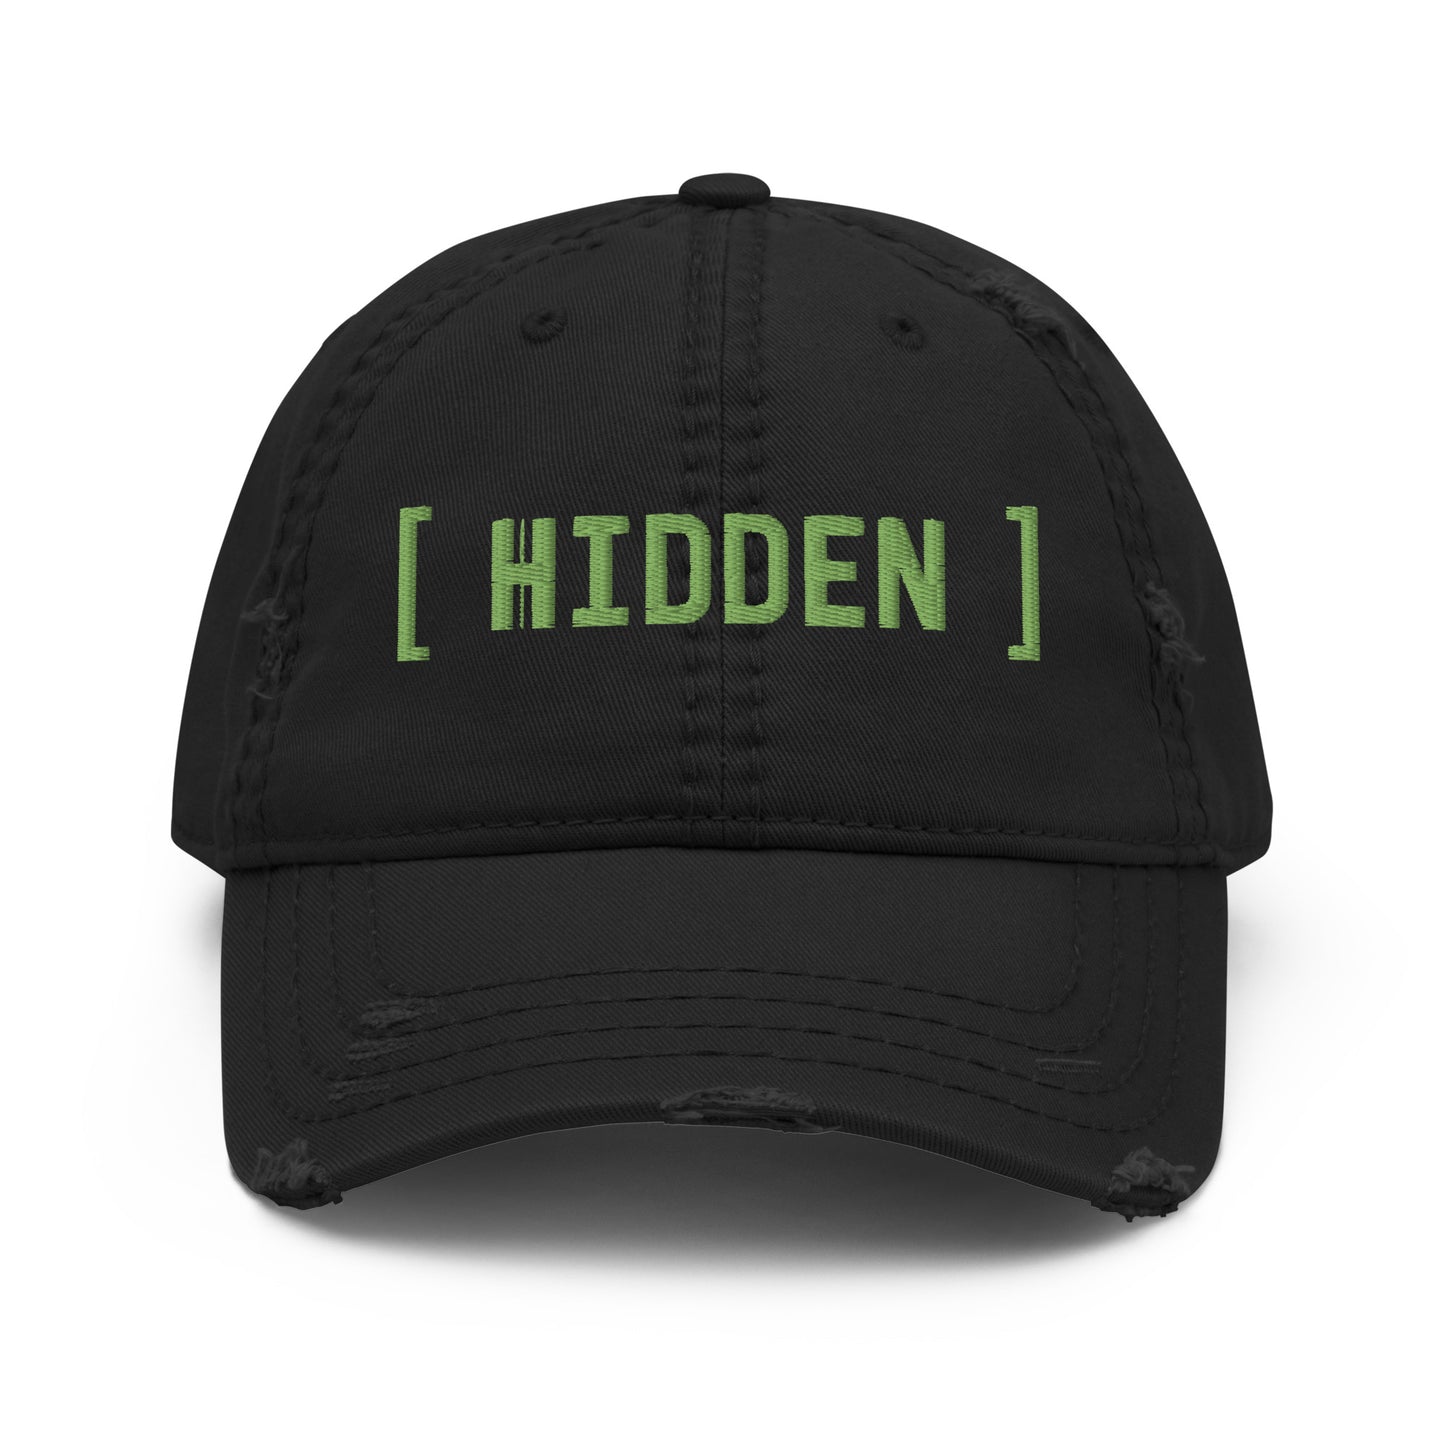 HIDDEN ] distressed dad hat